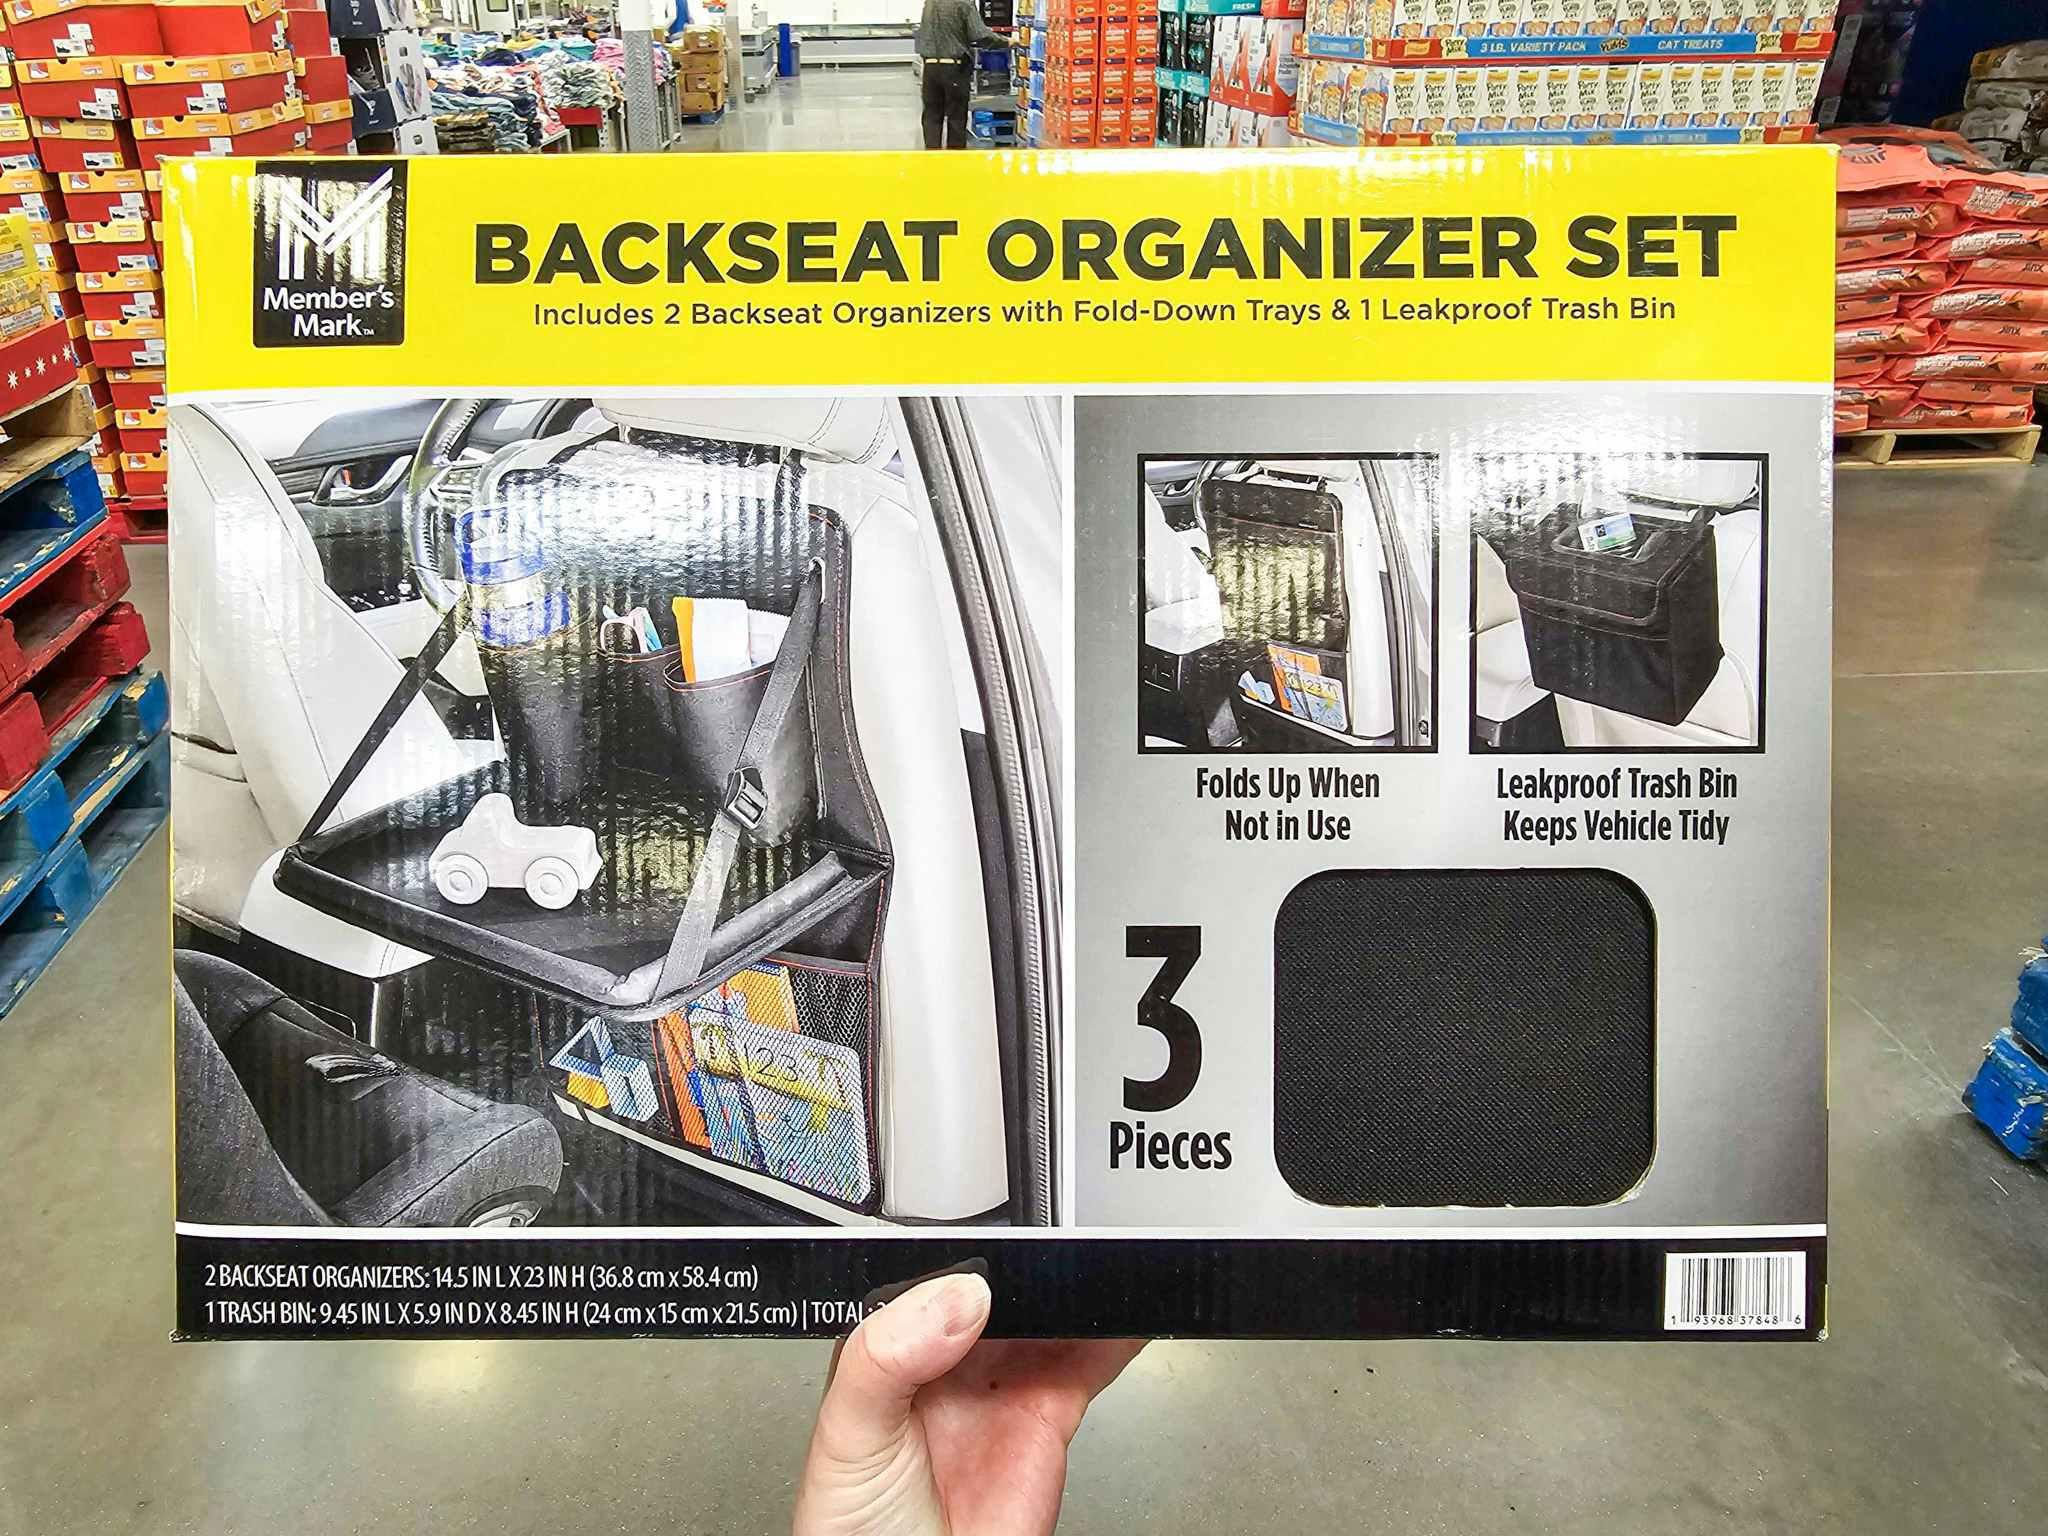 person holding a backseat organizer set